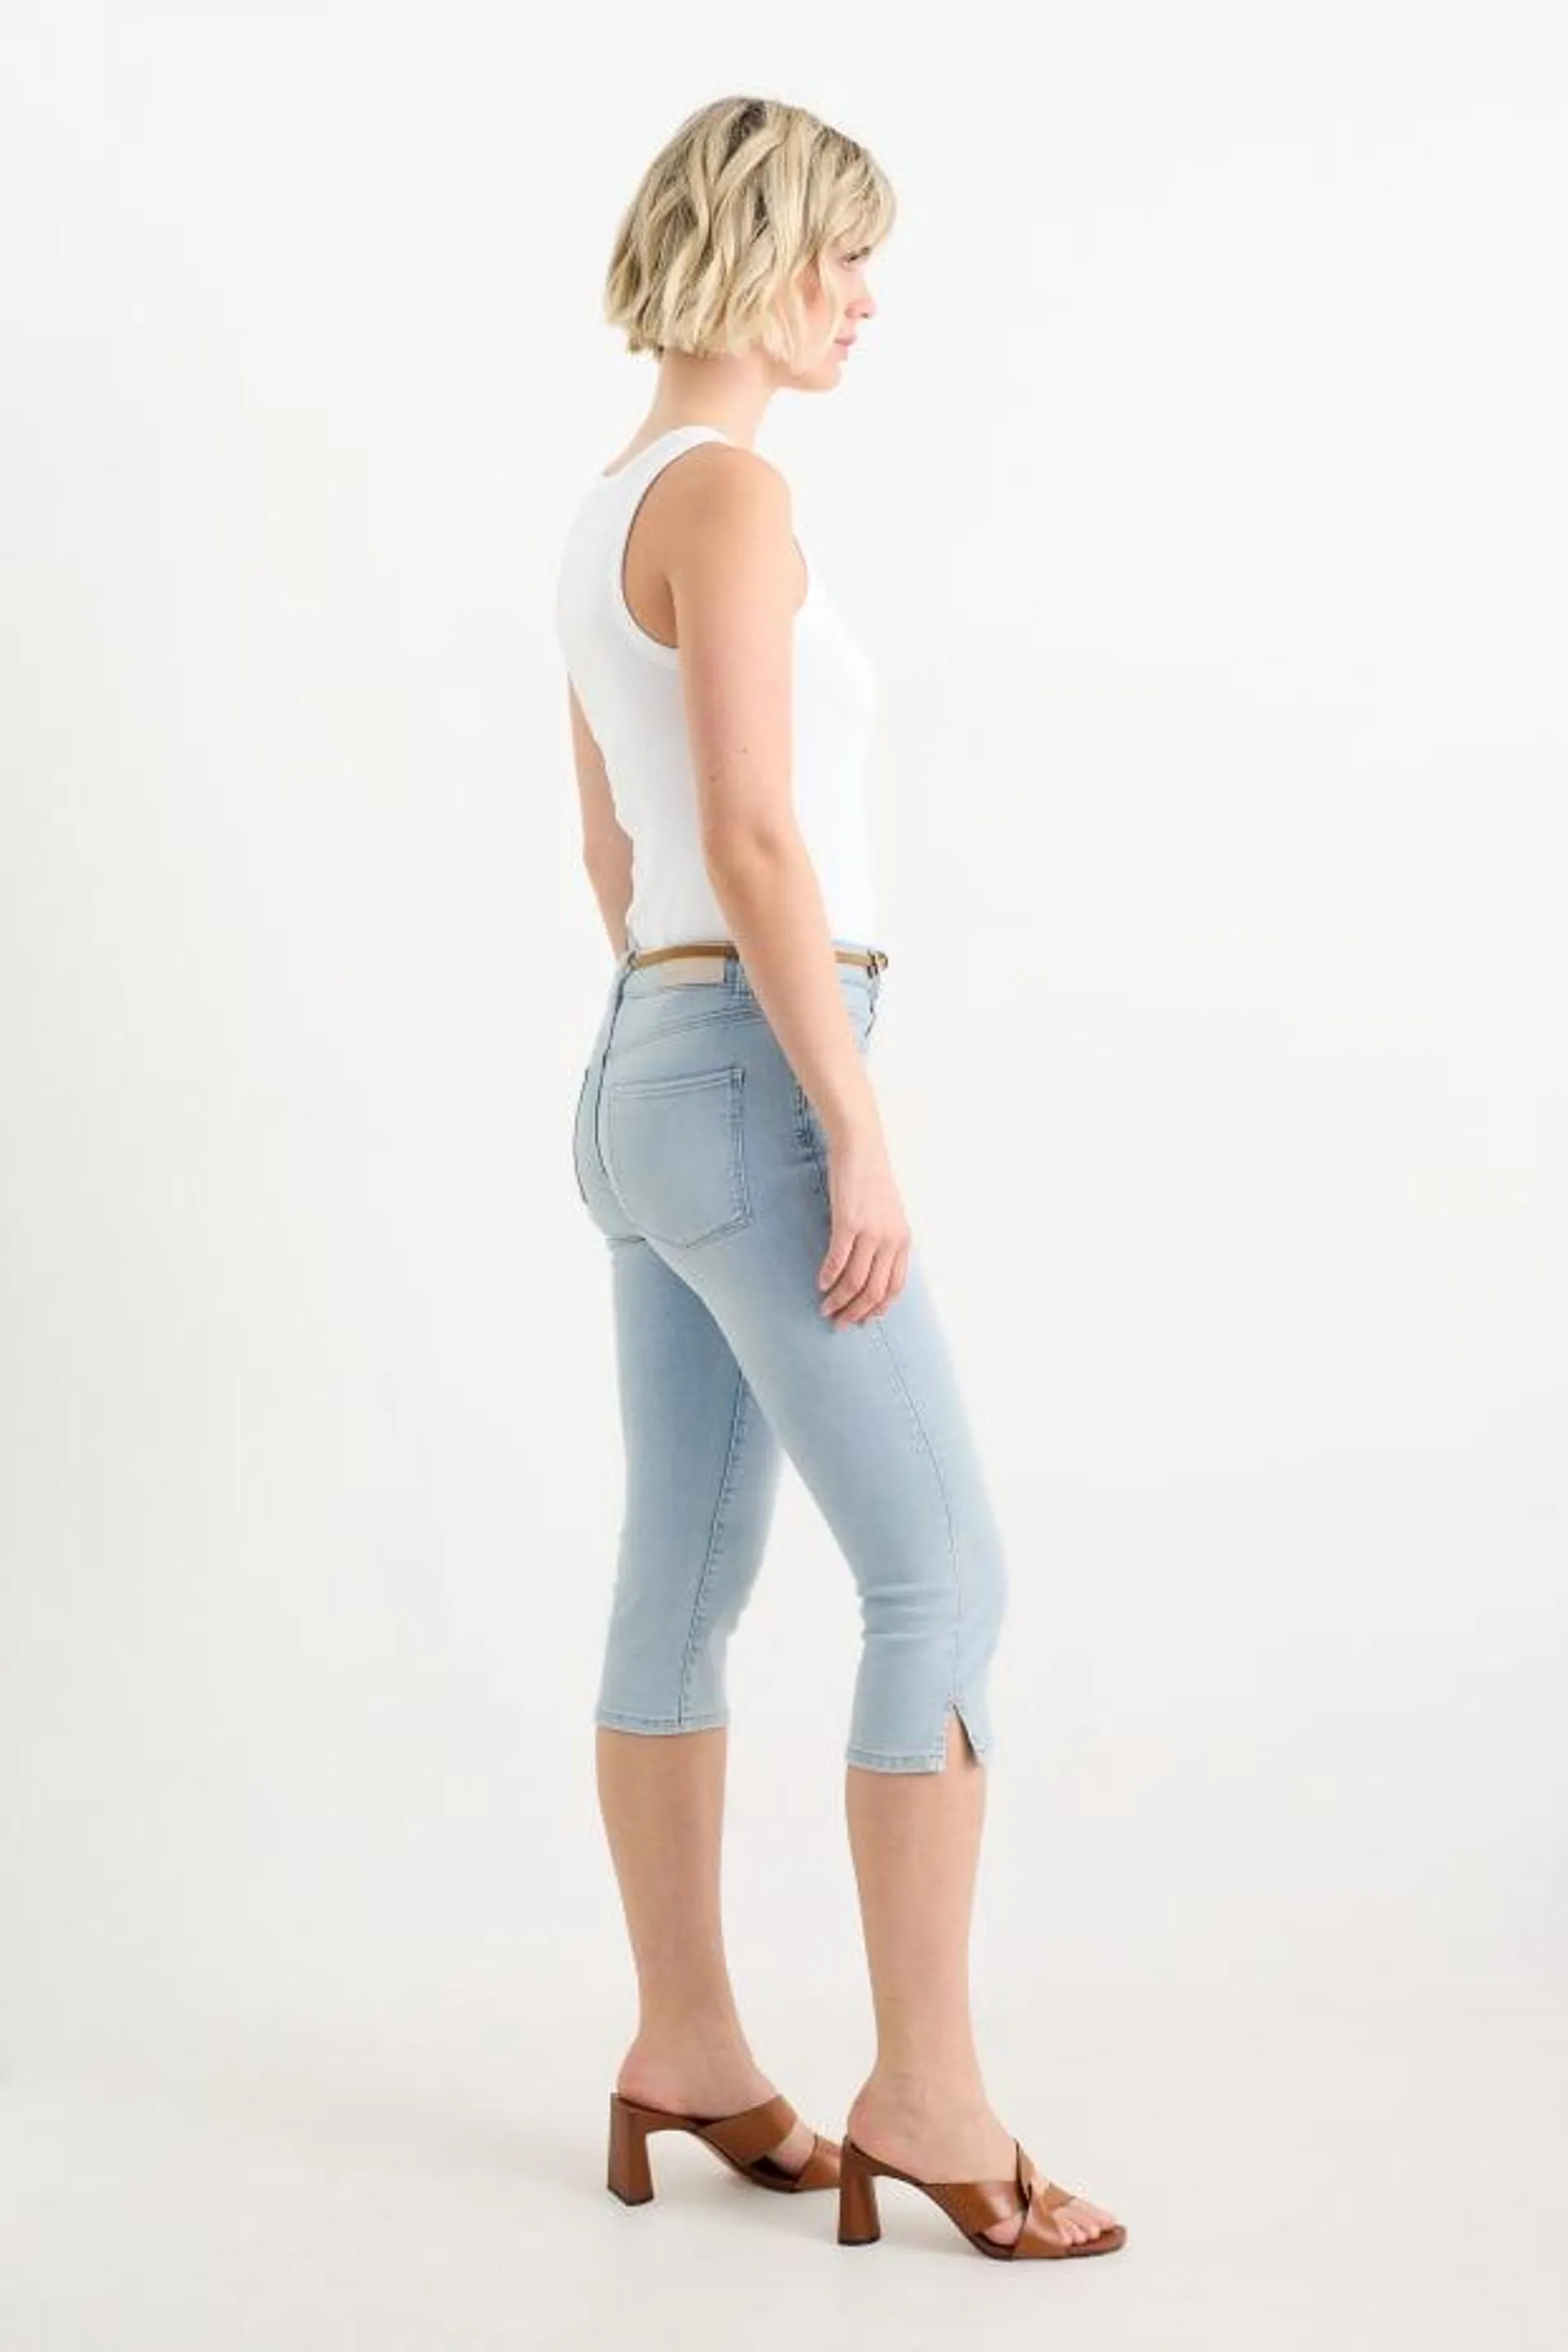 Capri jeans with belt - mid-rise waist